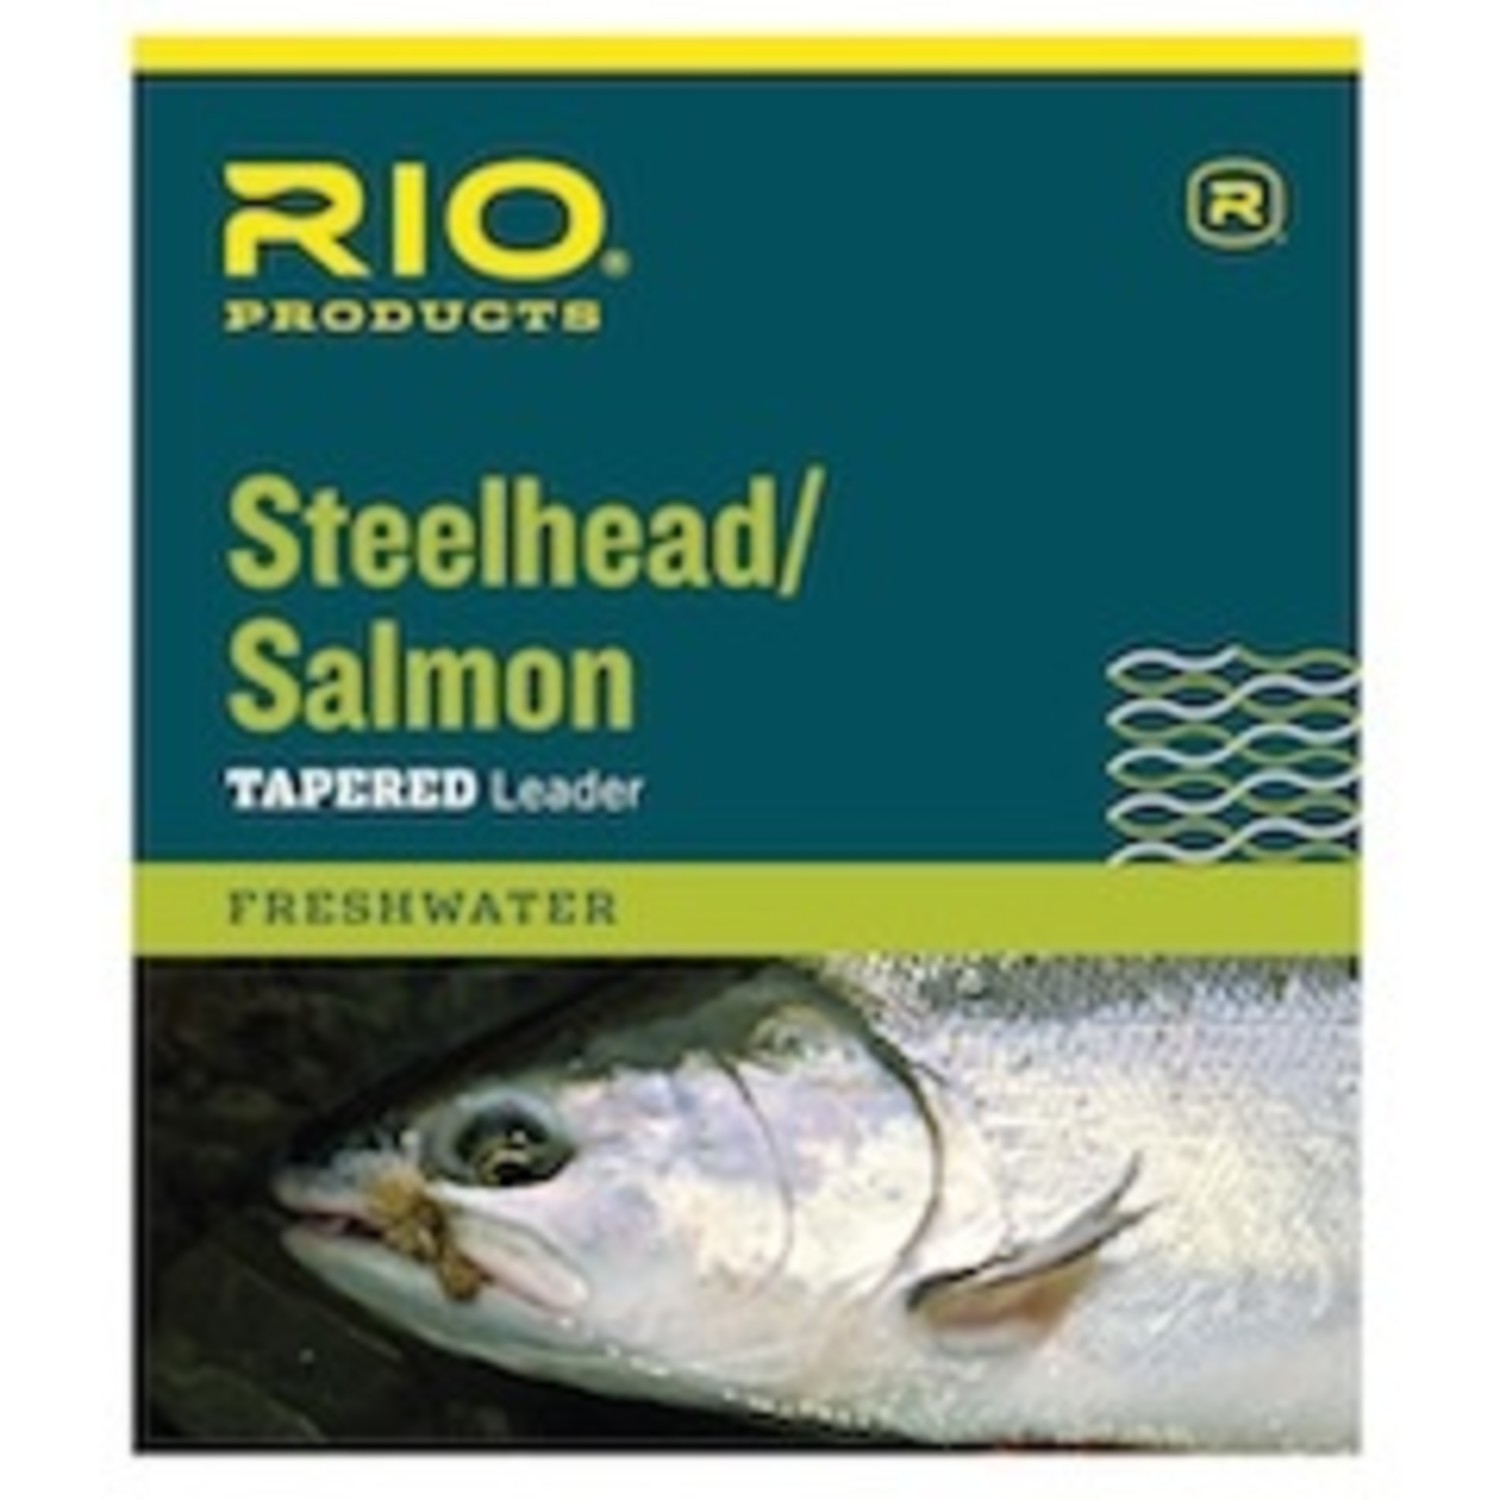 Rio Rio Steelhead/ Salmon Tapered Leader, Glacial Green - Royal Treatment Fly  Fishing